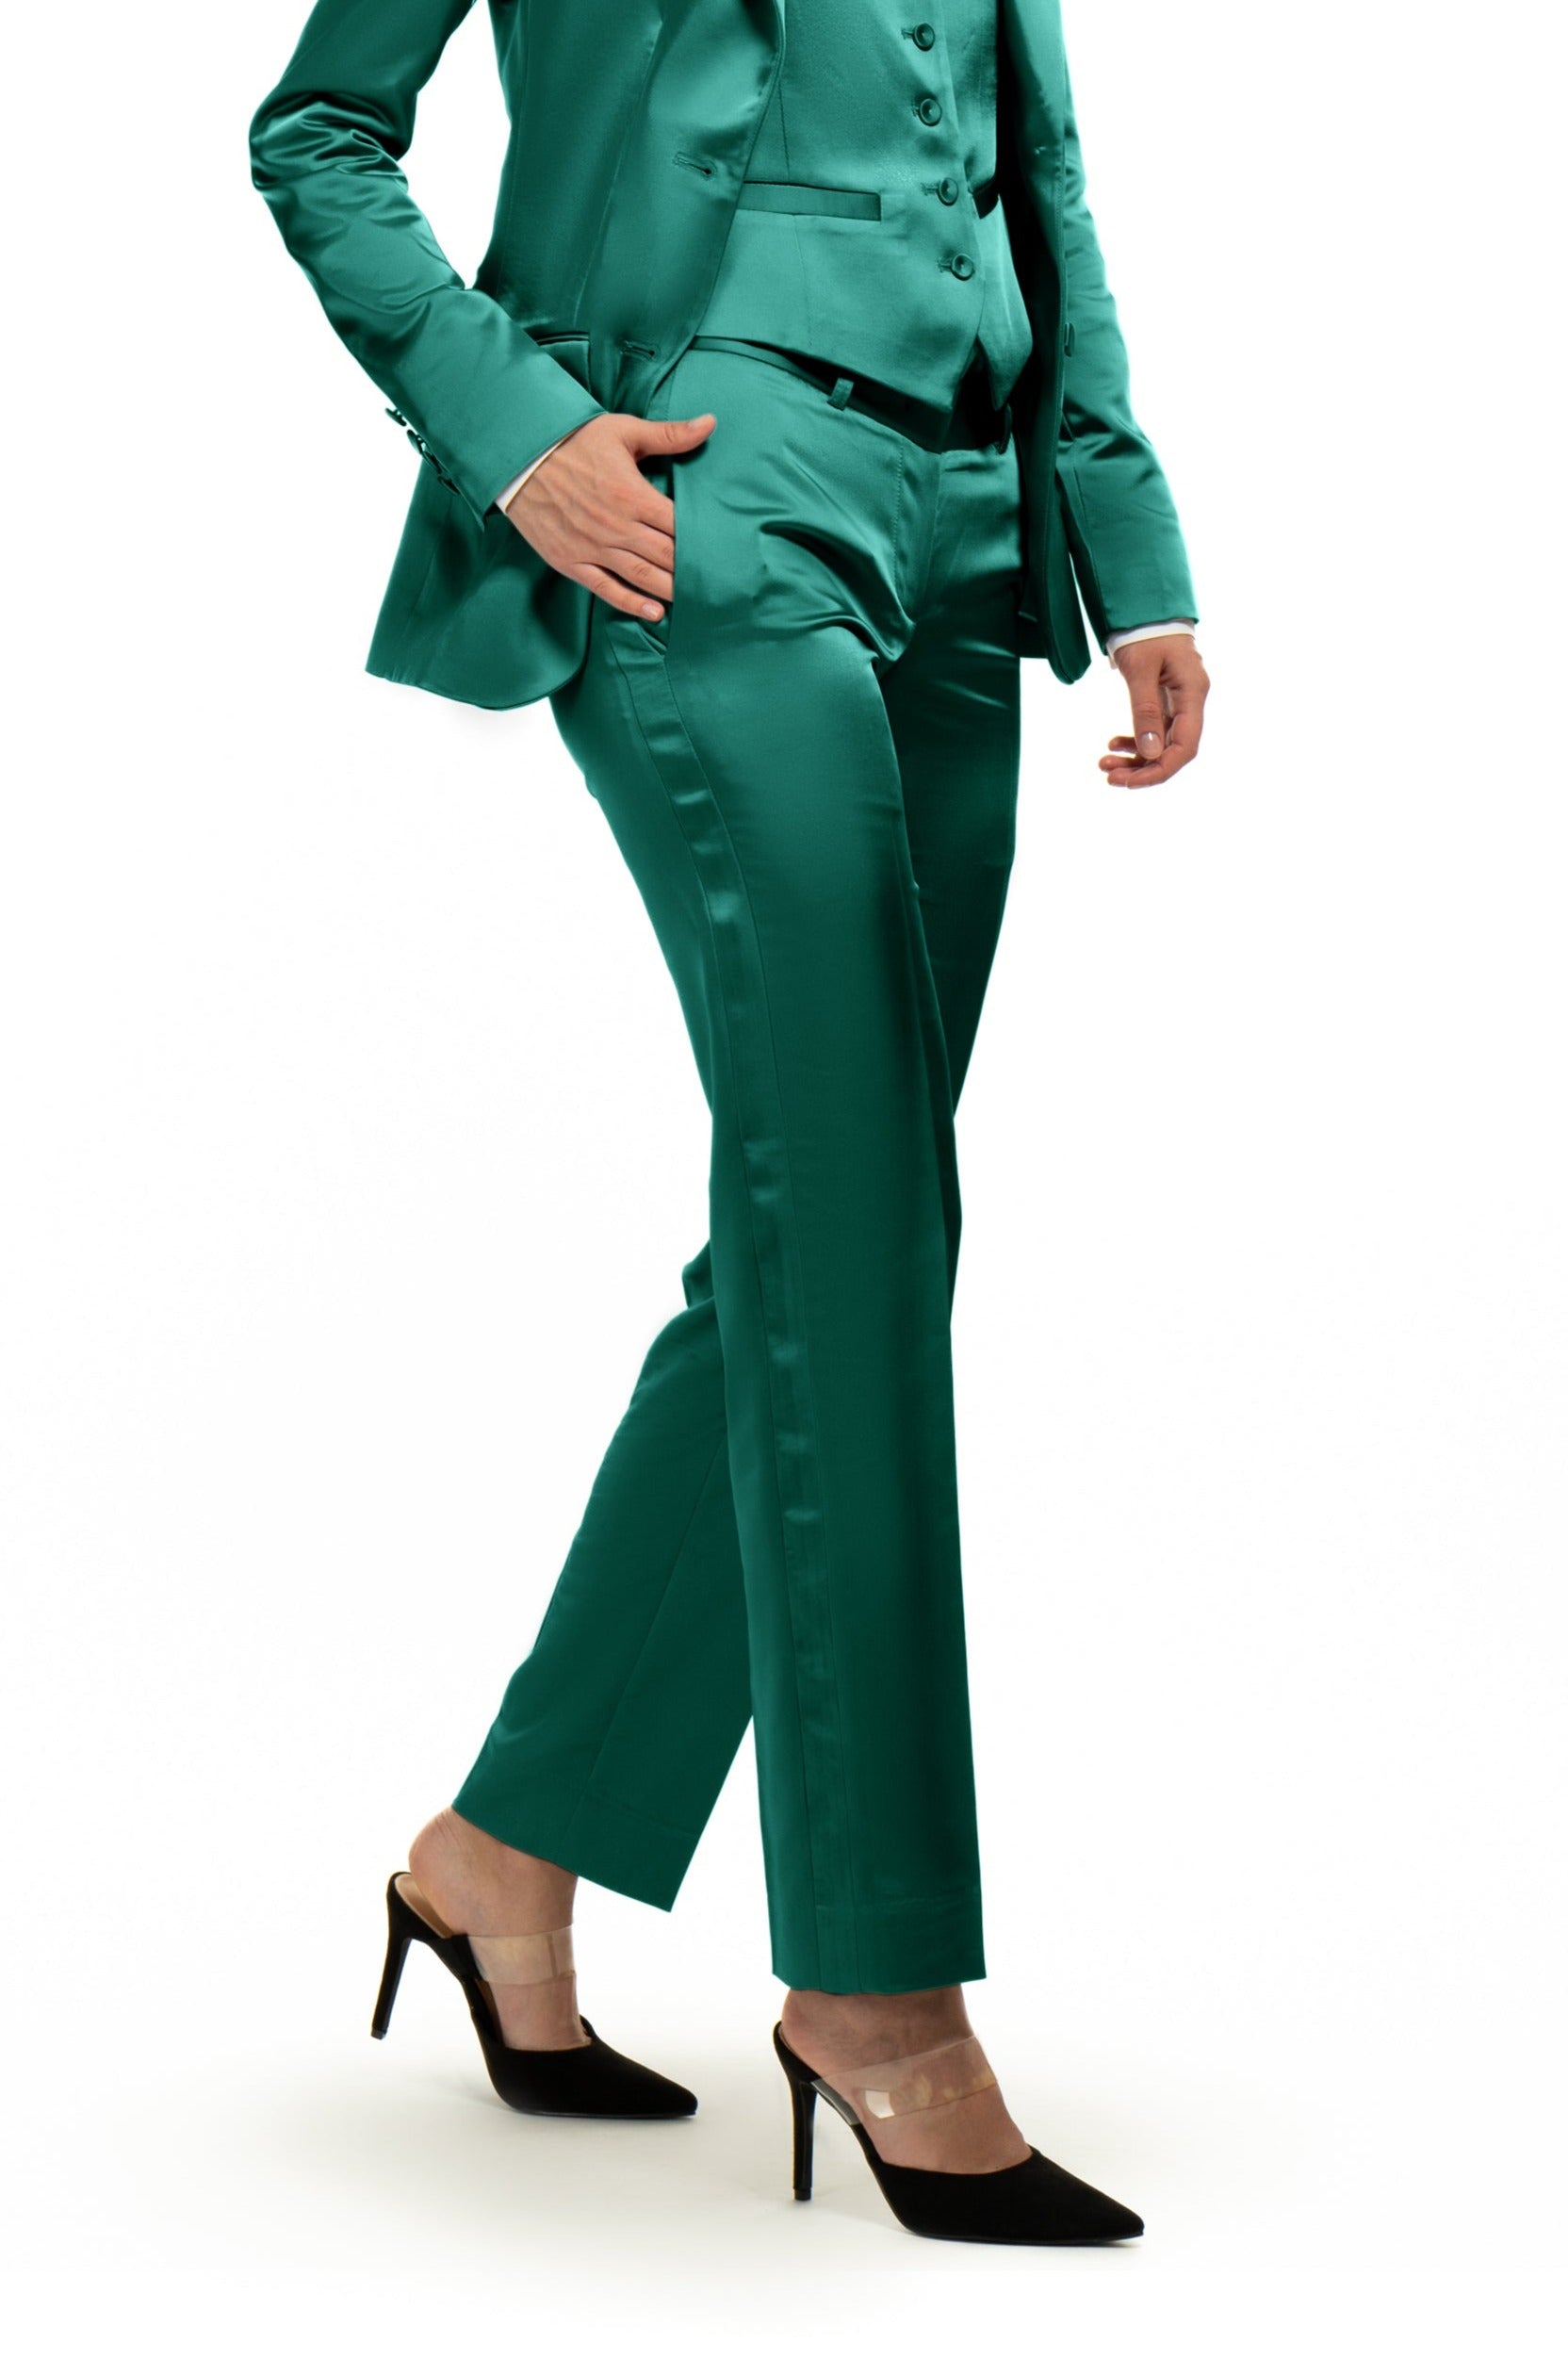 Emerald Green Satin Slim Fit Tuxedo Pants w/ Satin Back Pocket